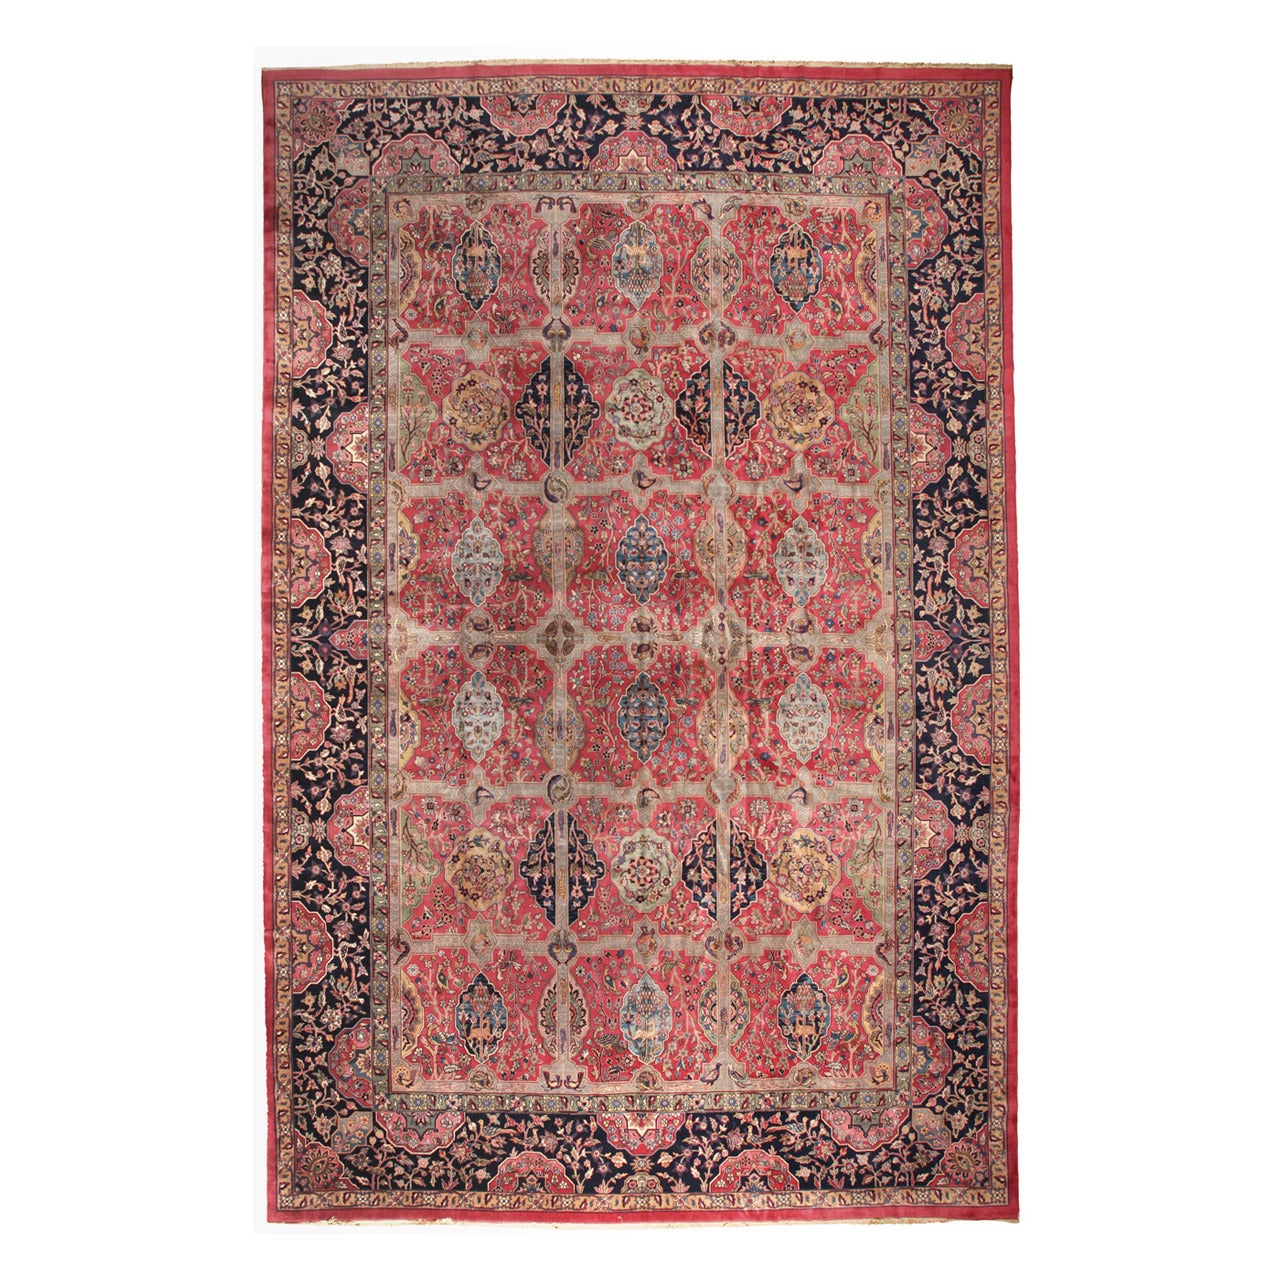 Antique Oversize Indian Carpet For Sale